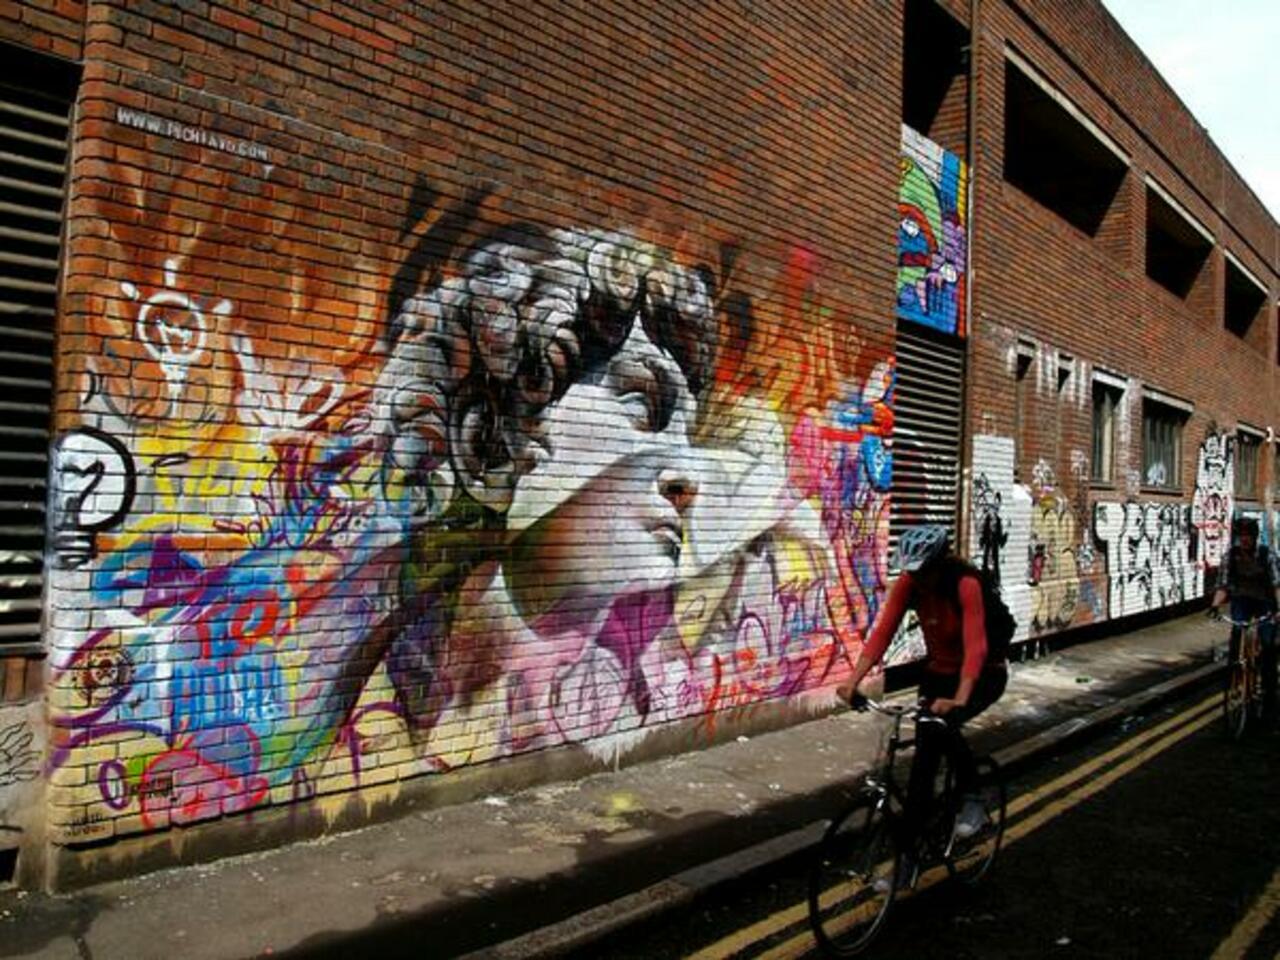 Like  RT @iIusionOptica: Artista: PichiAvo 
Londres, Reino Unido. 
#art #streetart #mural #graffiti http://t.co/N9CG9RSLYH